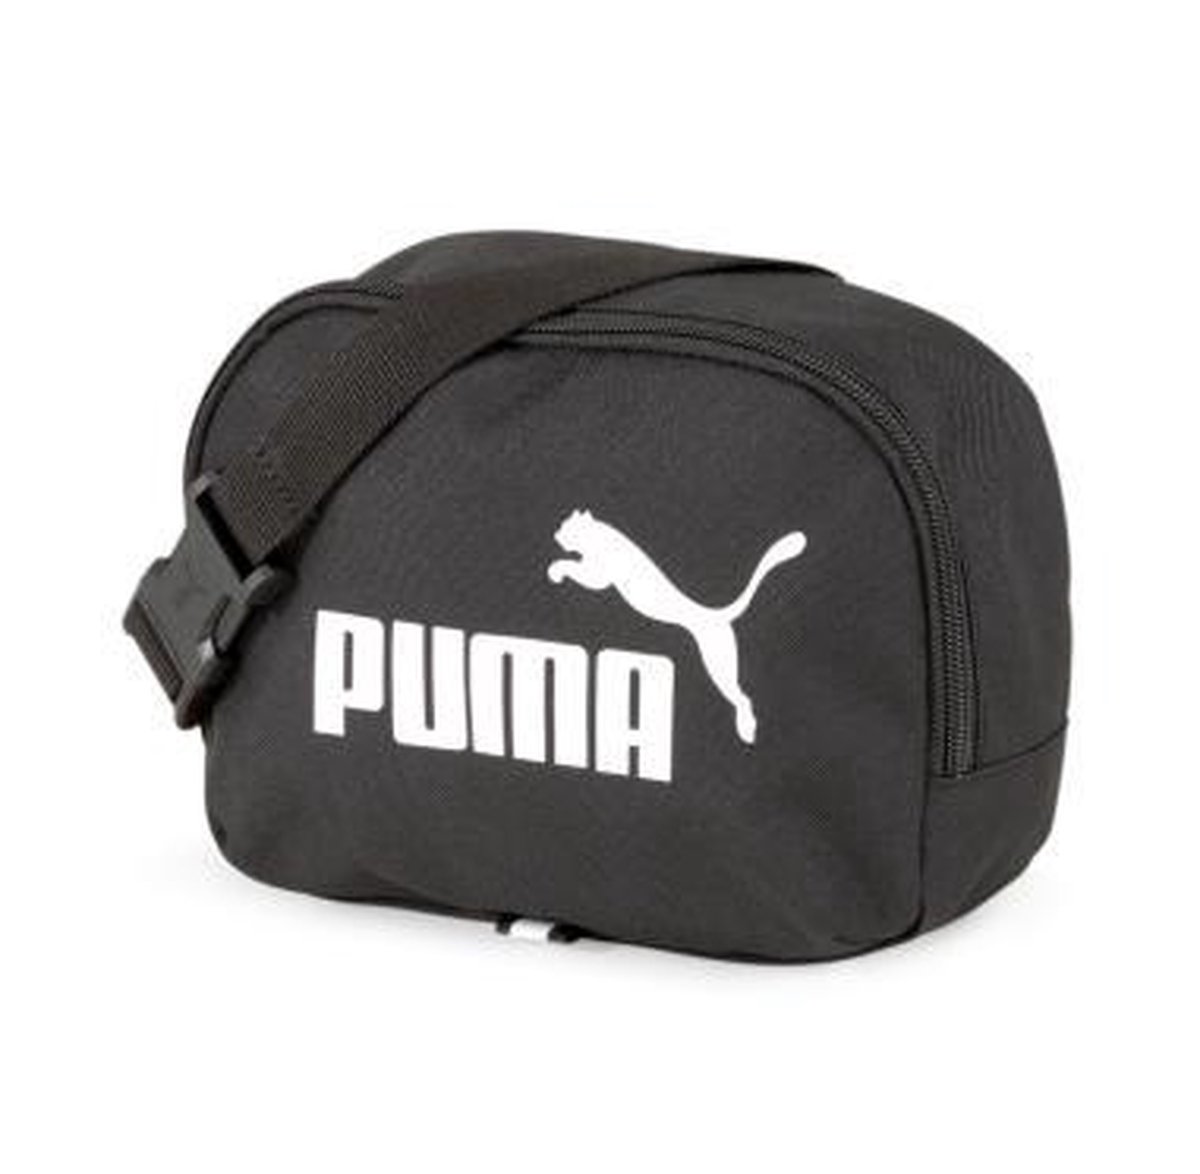 Puma Tas - Unisex - zwart/ wit | bol